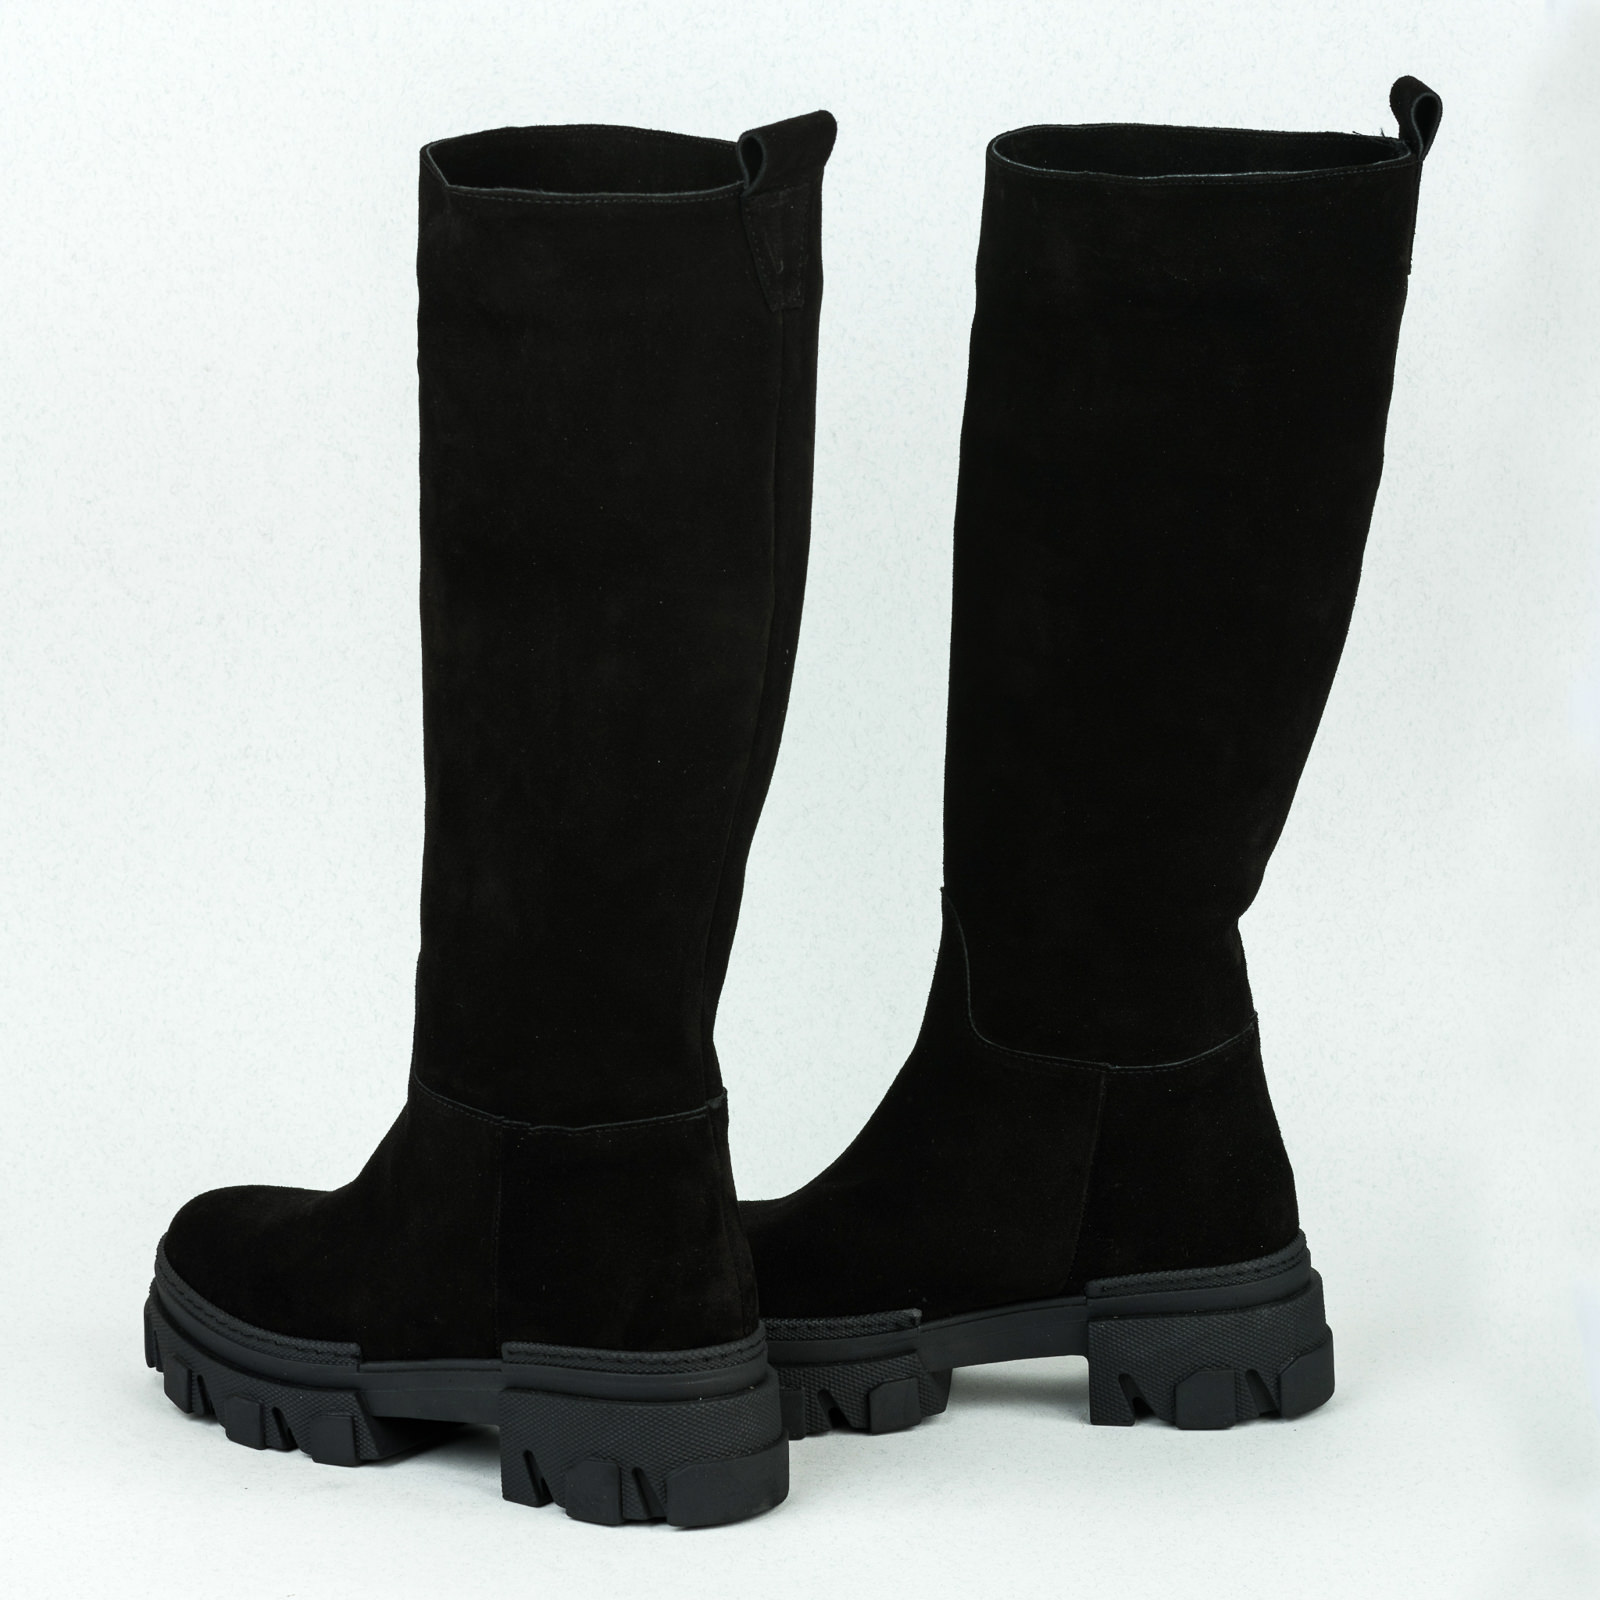 Leather WATERPROOF boots B127 - BLACK